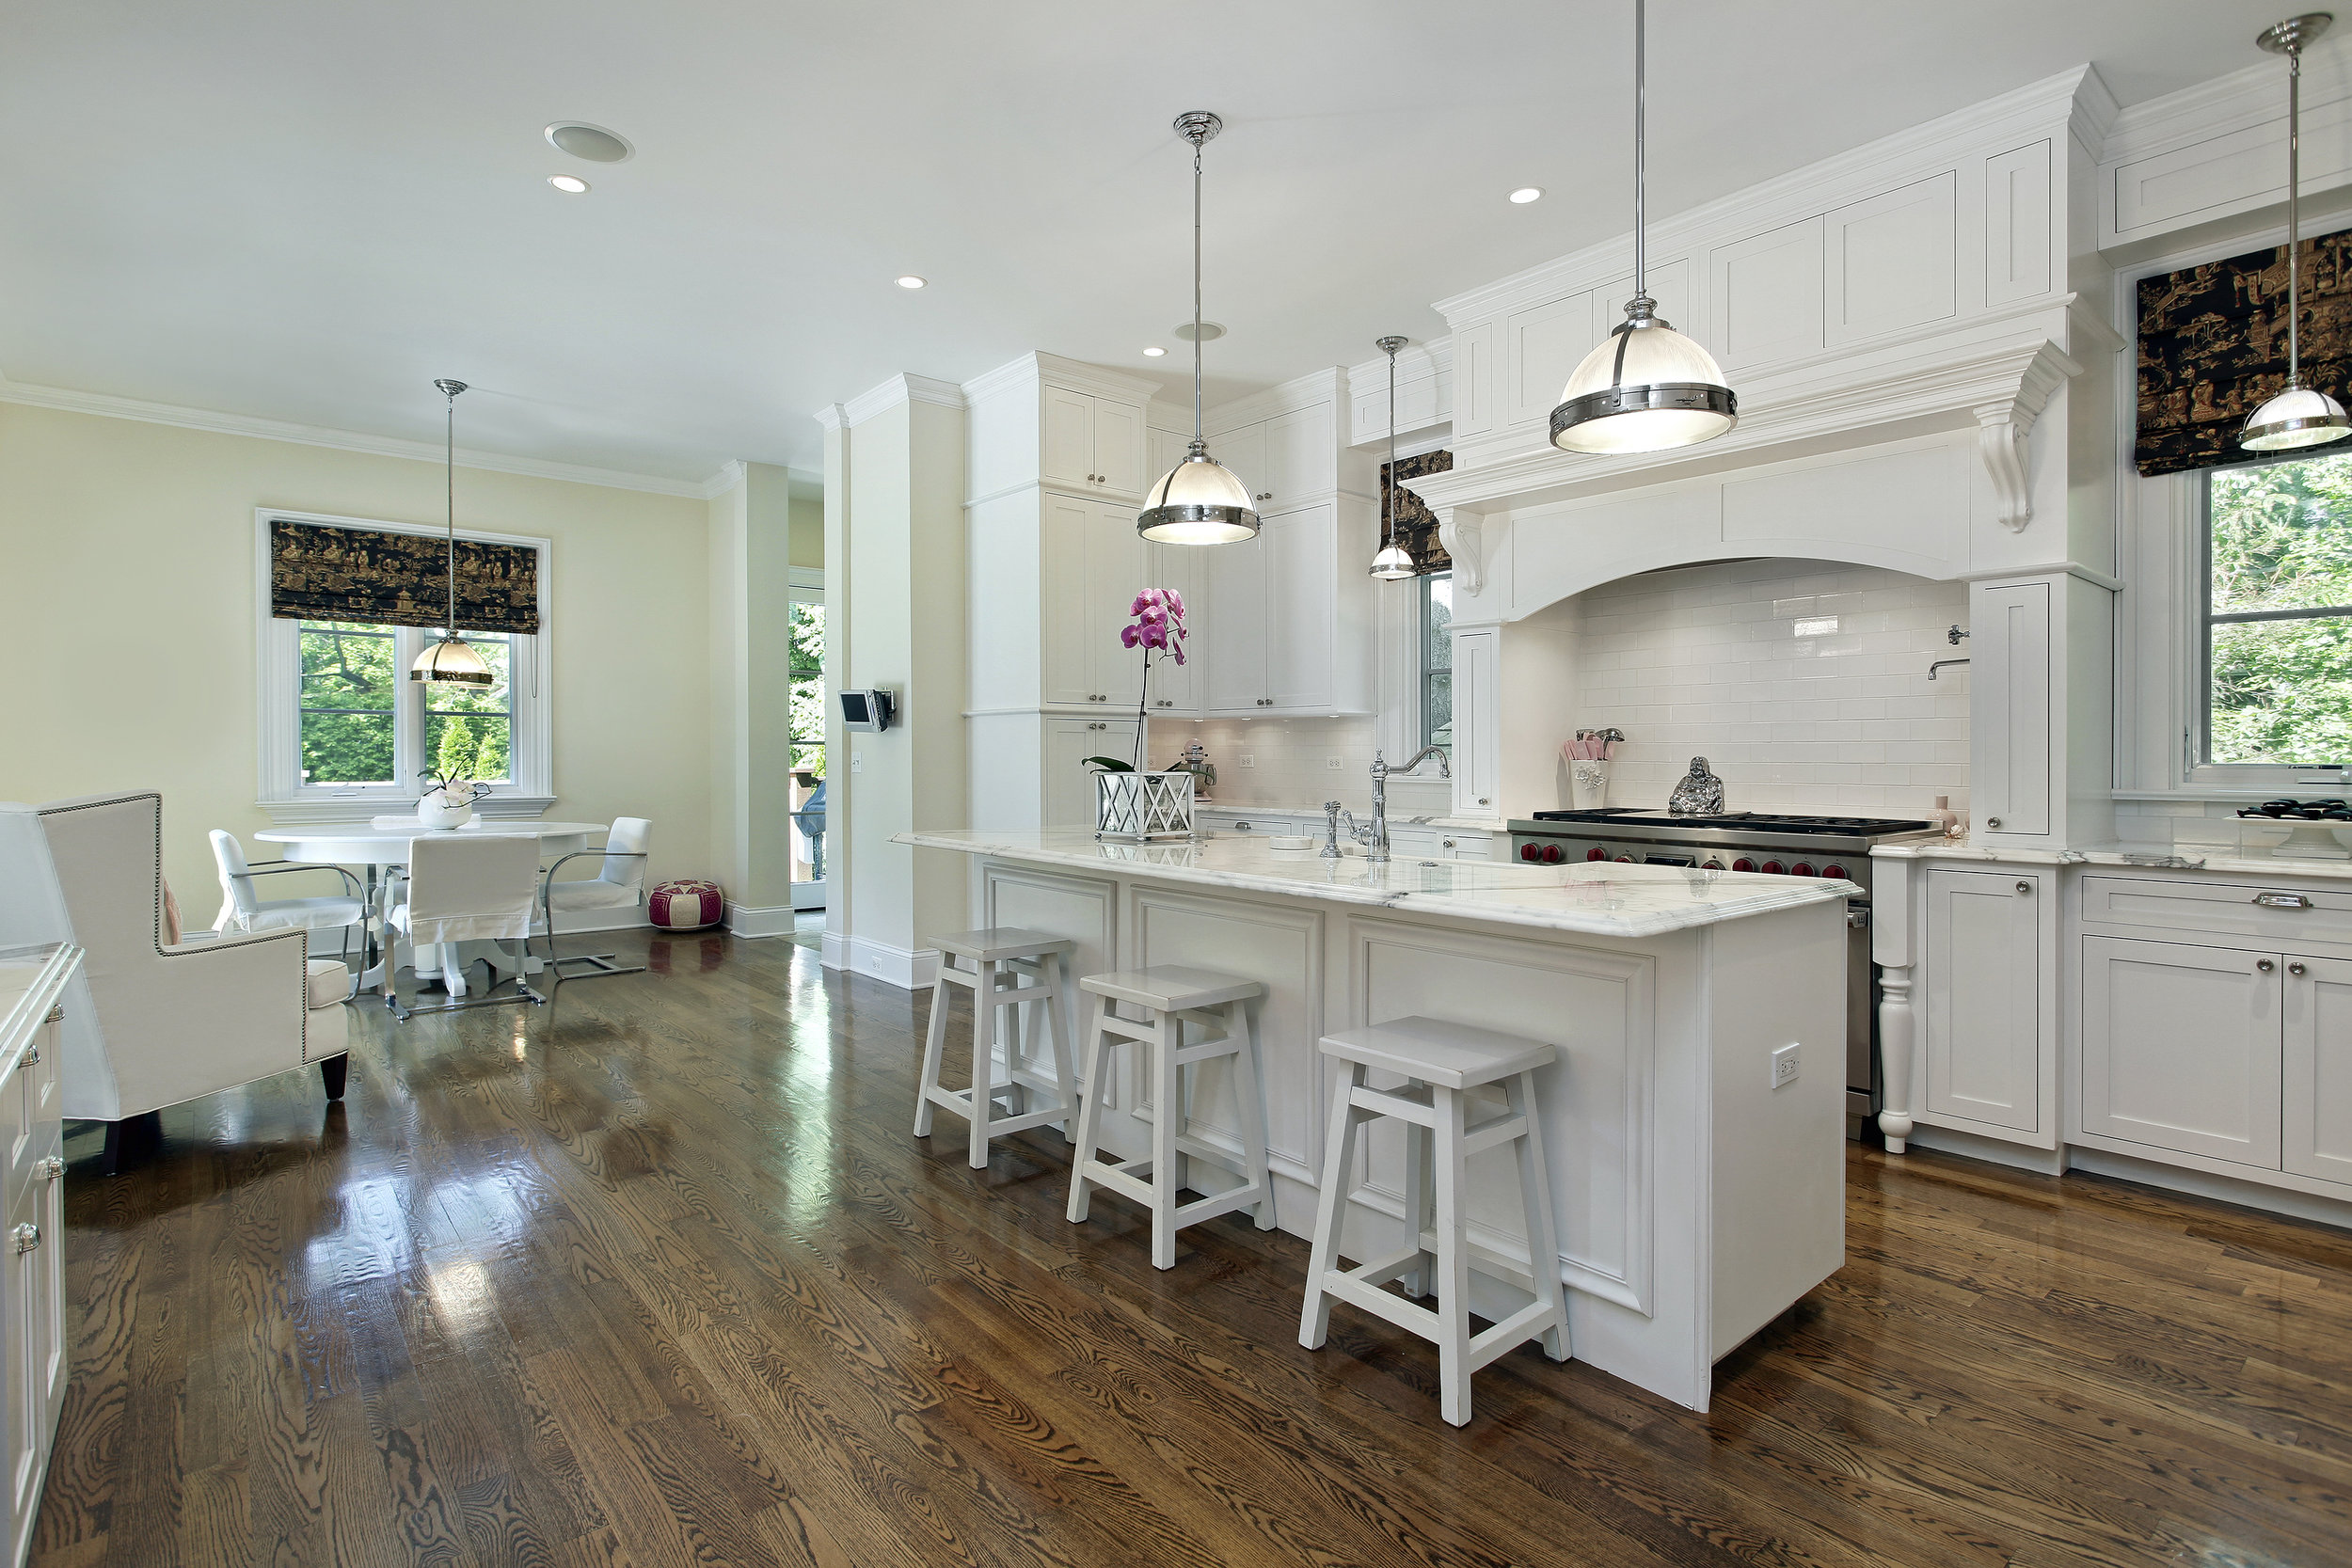 bigstock-Large-kitchen-in-luxury-home-w-75635452.jpg